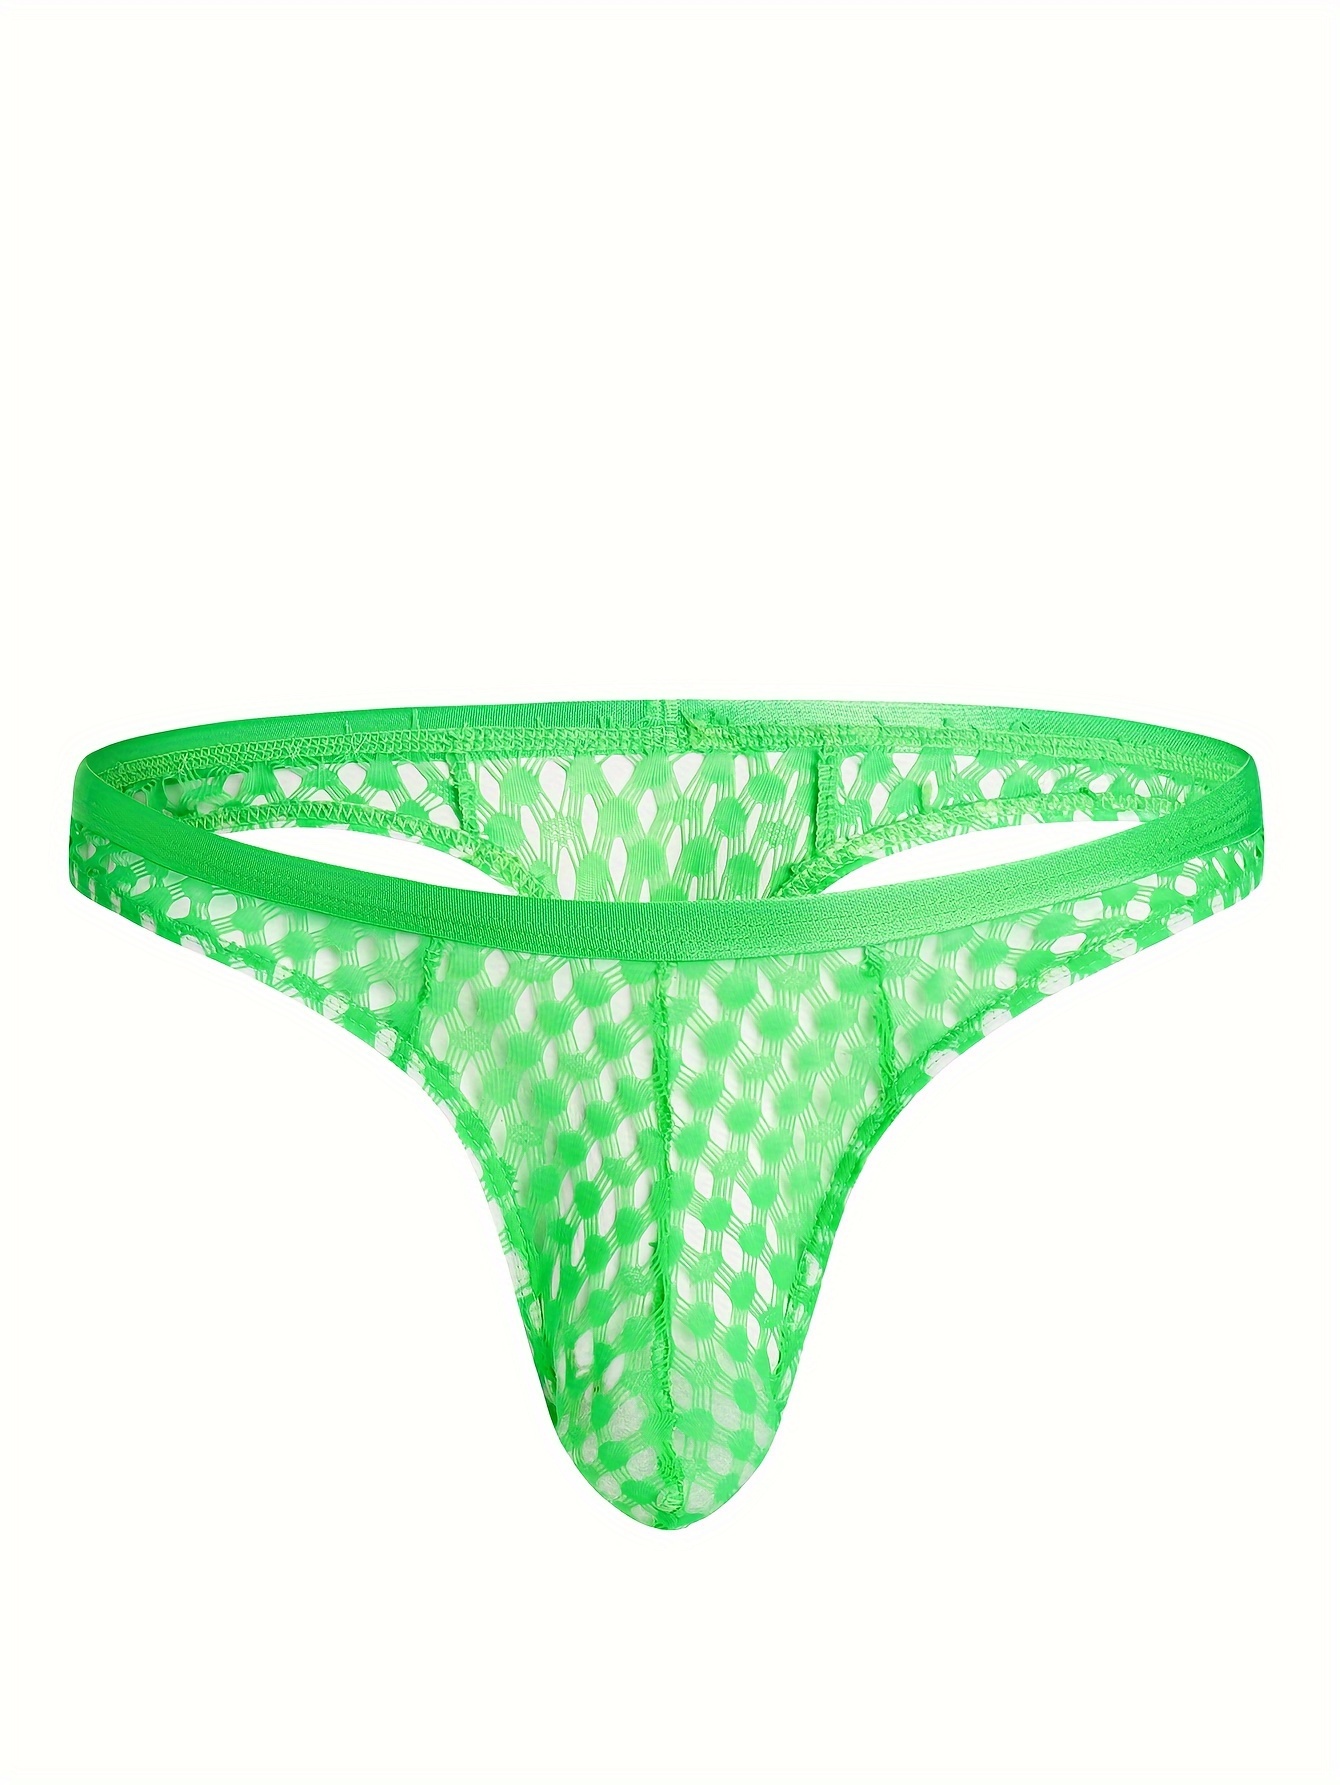 T-Back Low Waist Thong G-string Transparent Panty, Lingerie